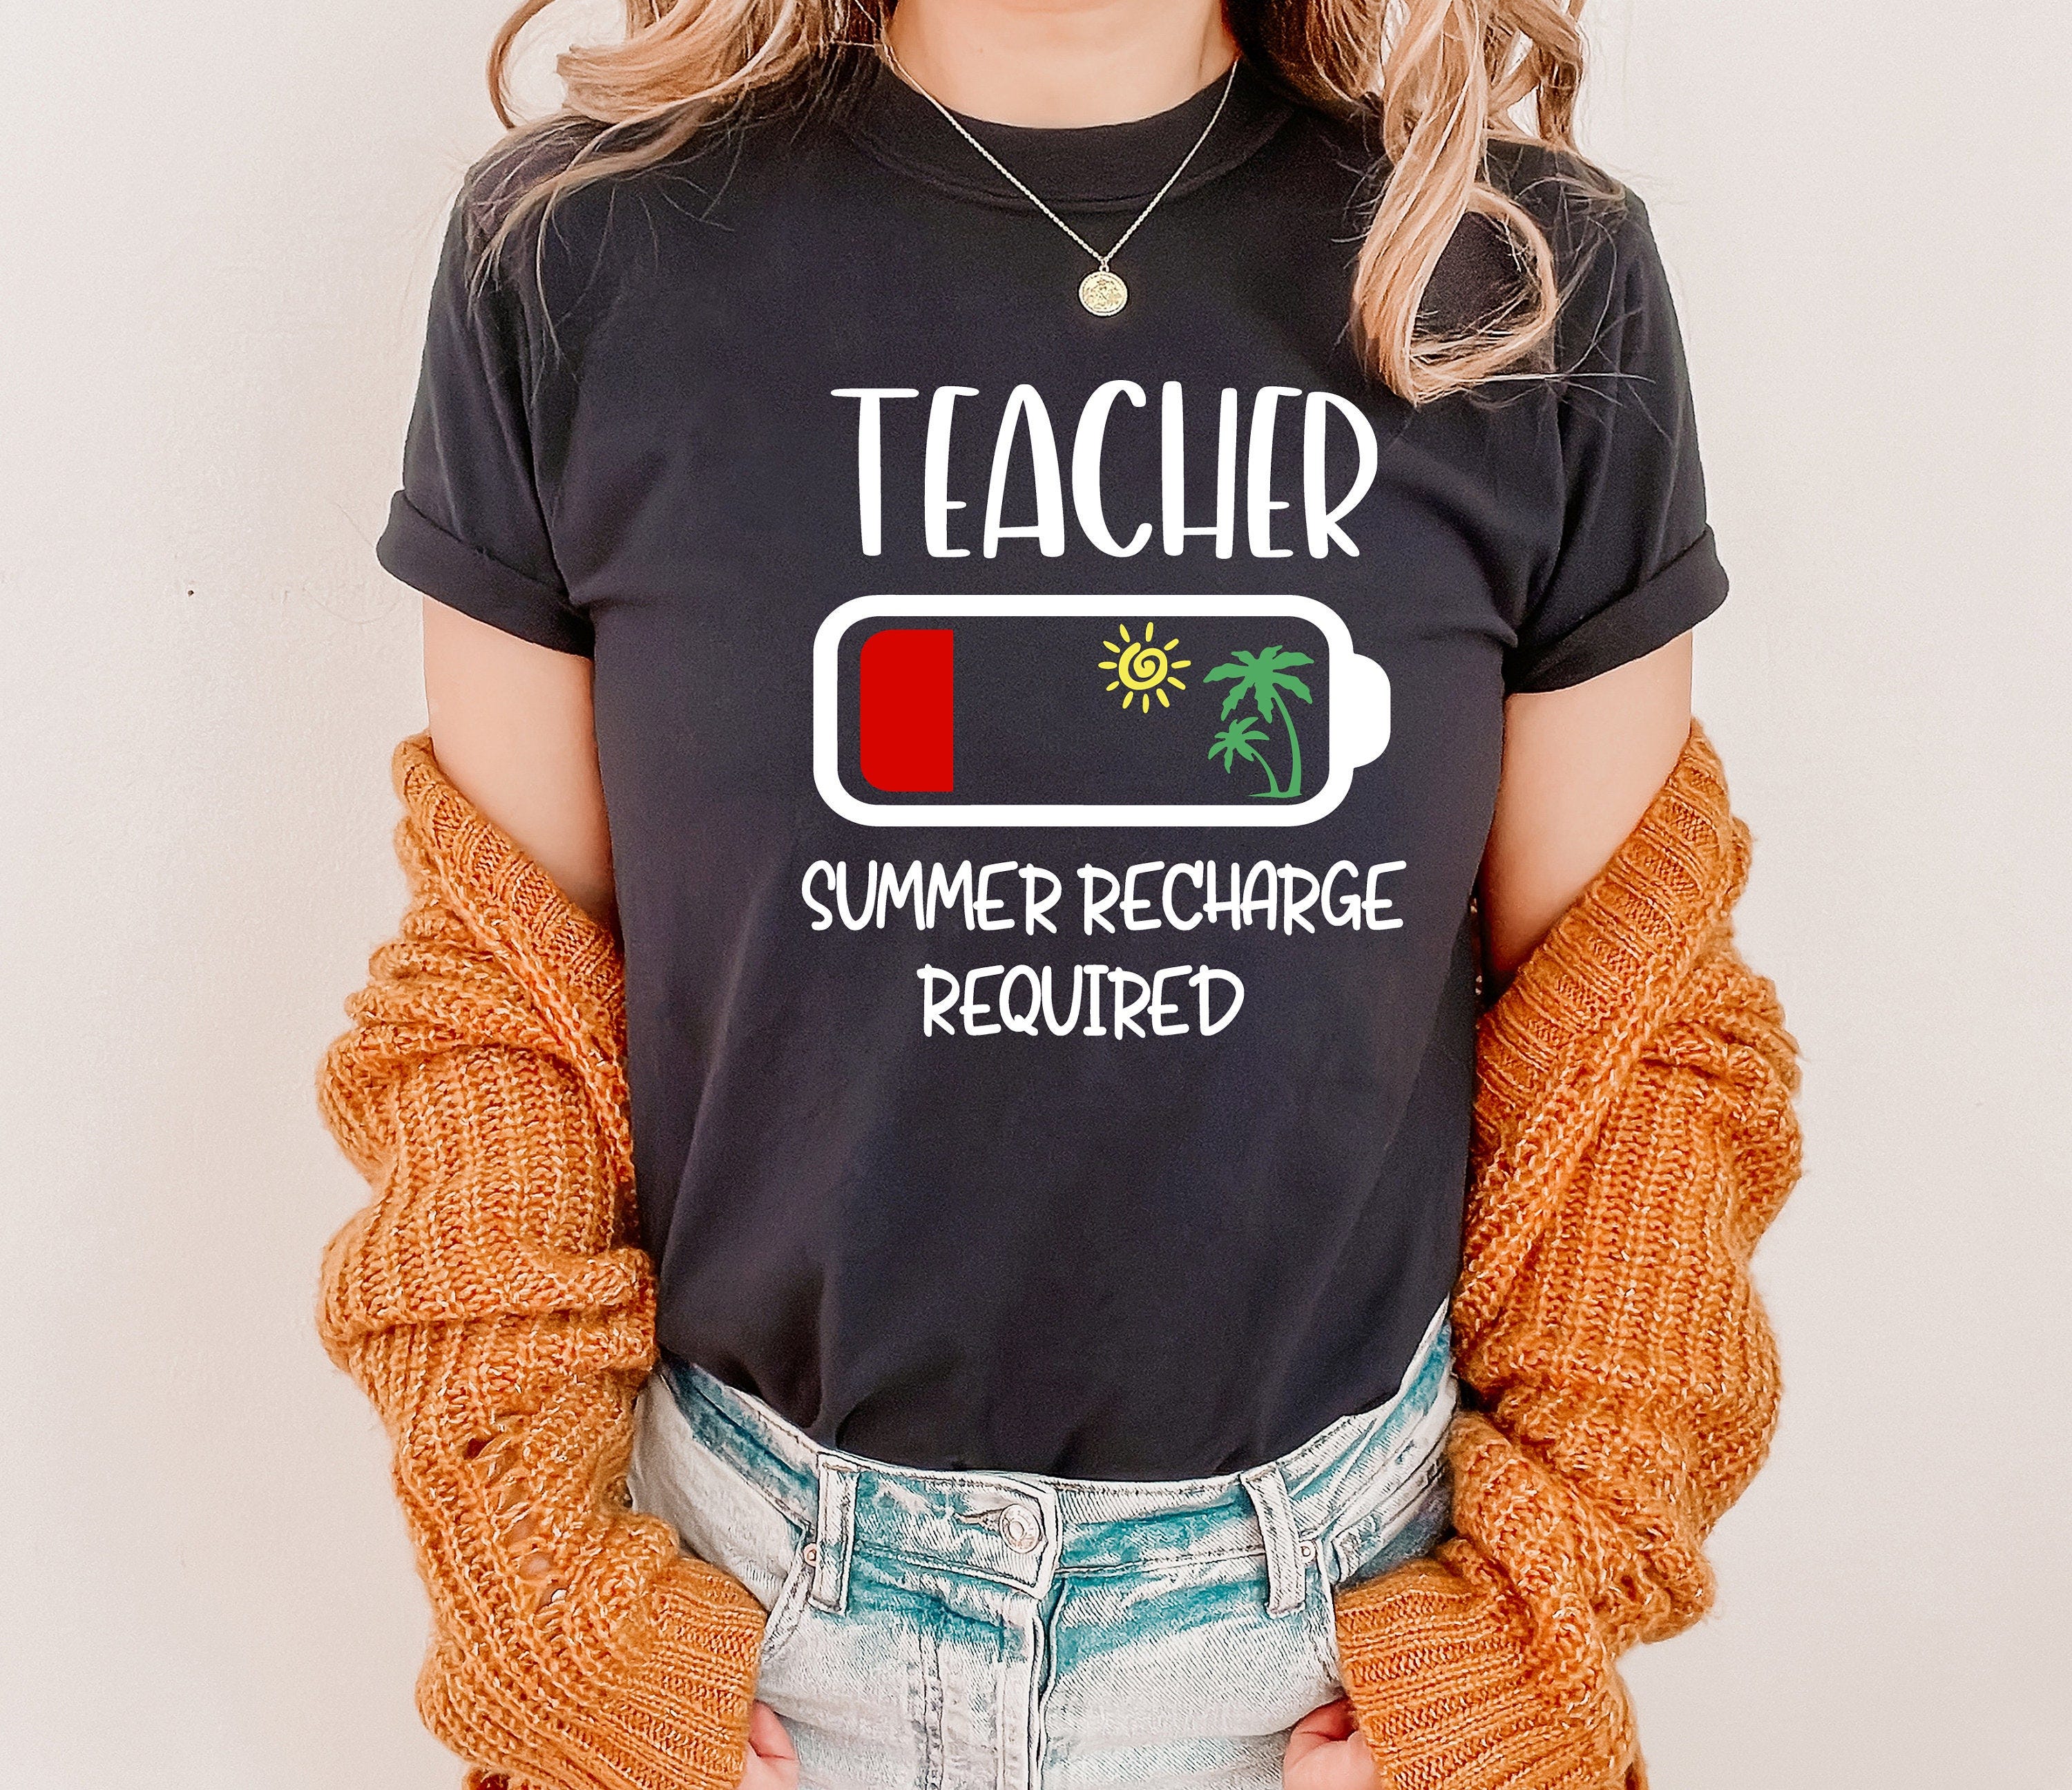 Teacher Summer Recharge Required Tshirt,Funny Teacher Summer Tee,Gift for Teacher,Teacher Vacation Shirt,Summer Break Tshirt,End of Year Tee